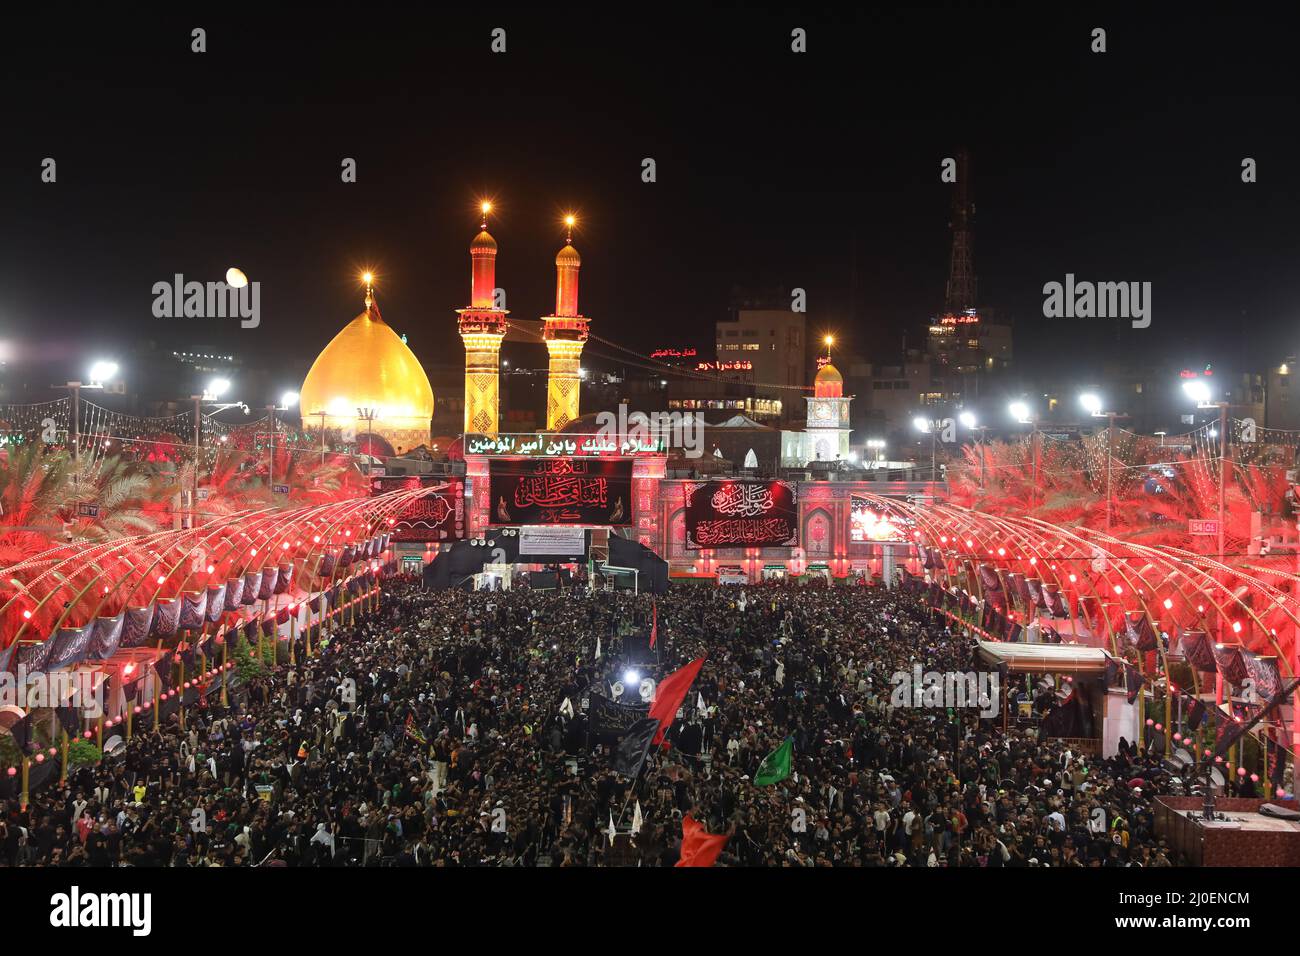 karbala, iraq - september 27, 2021: photo of imam abbas shrine in karbala city in Arbaʽeen ilgrimage cermony Stock Photo